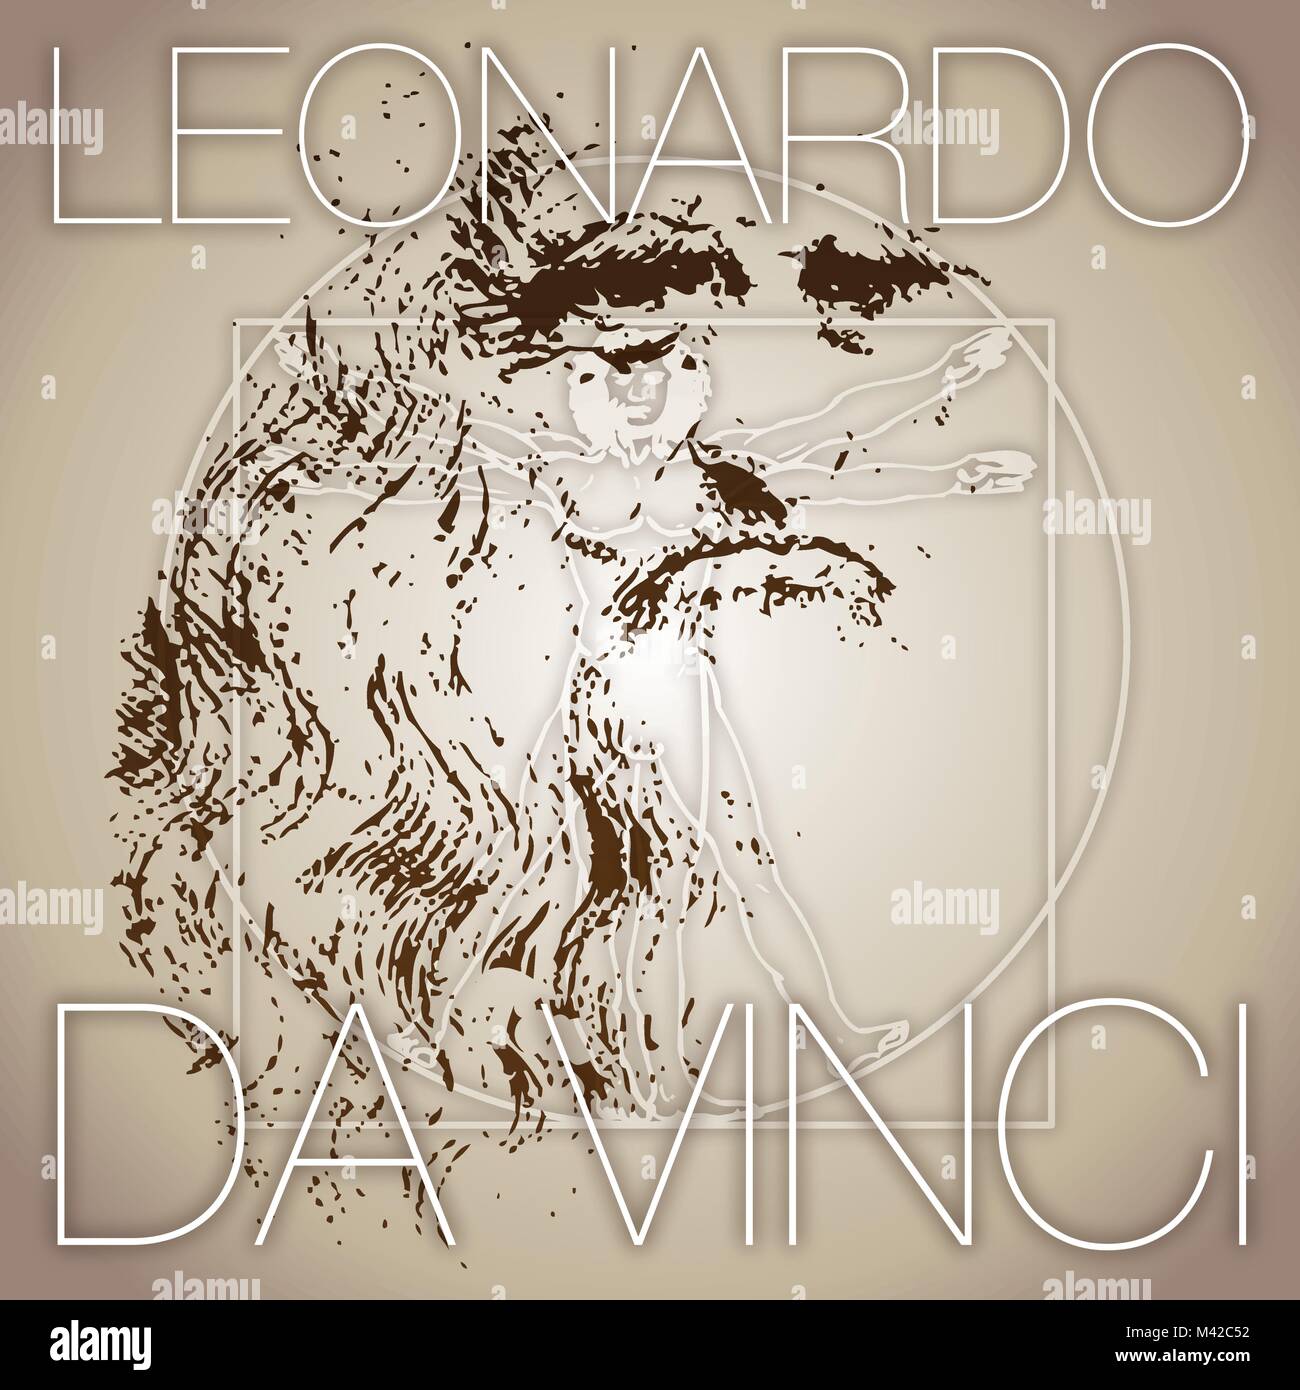 Leonardo Da Vinci portrait, vector illustration, graphic elaboration Stock Vector